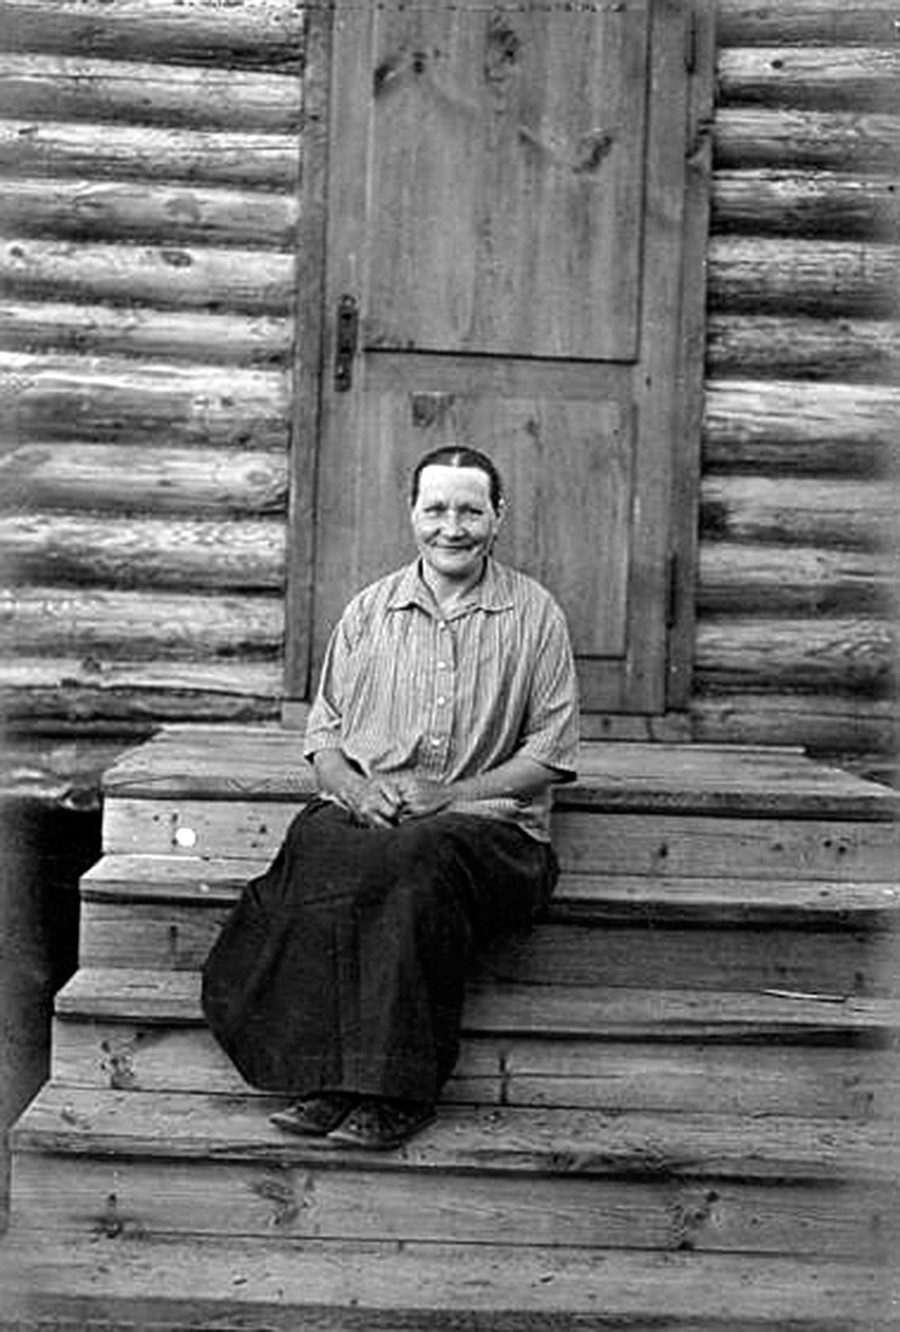 A portrait of a woman on a wooden porch  